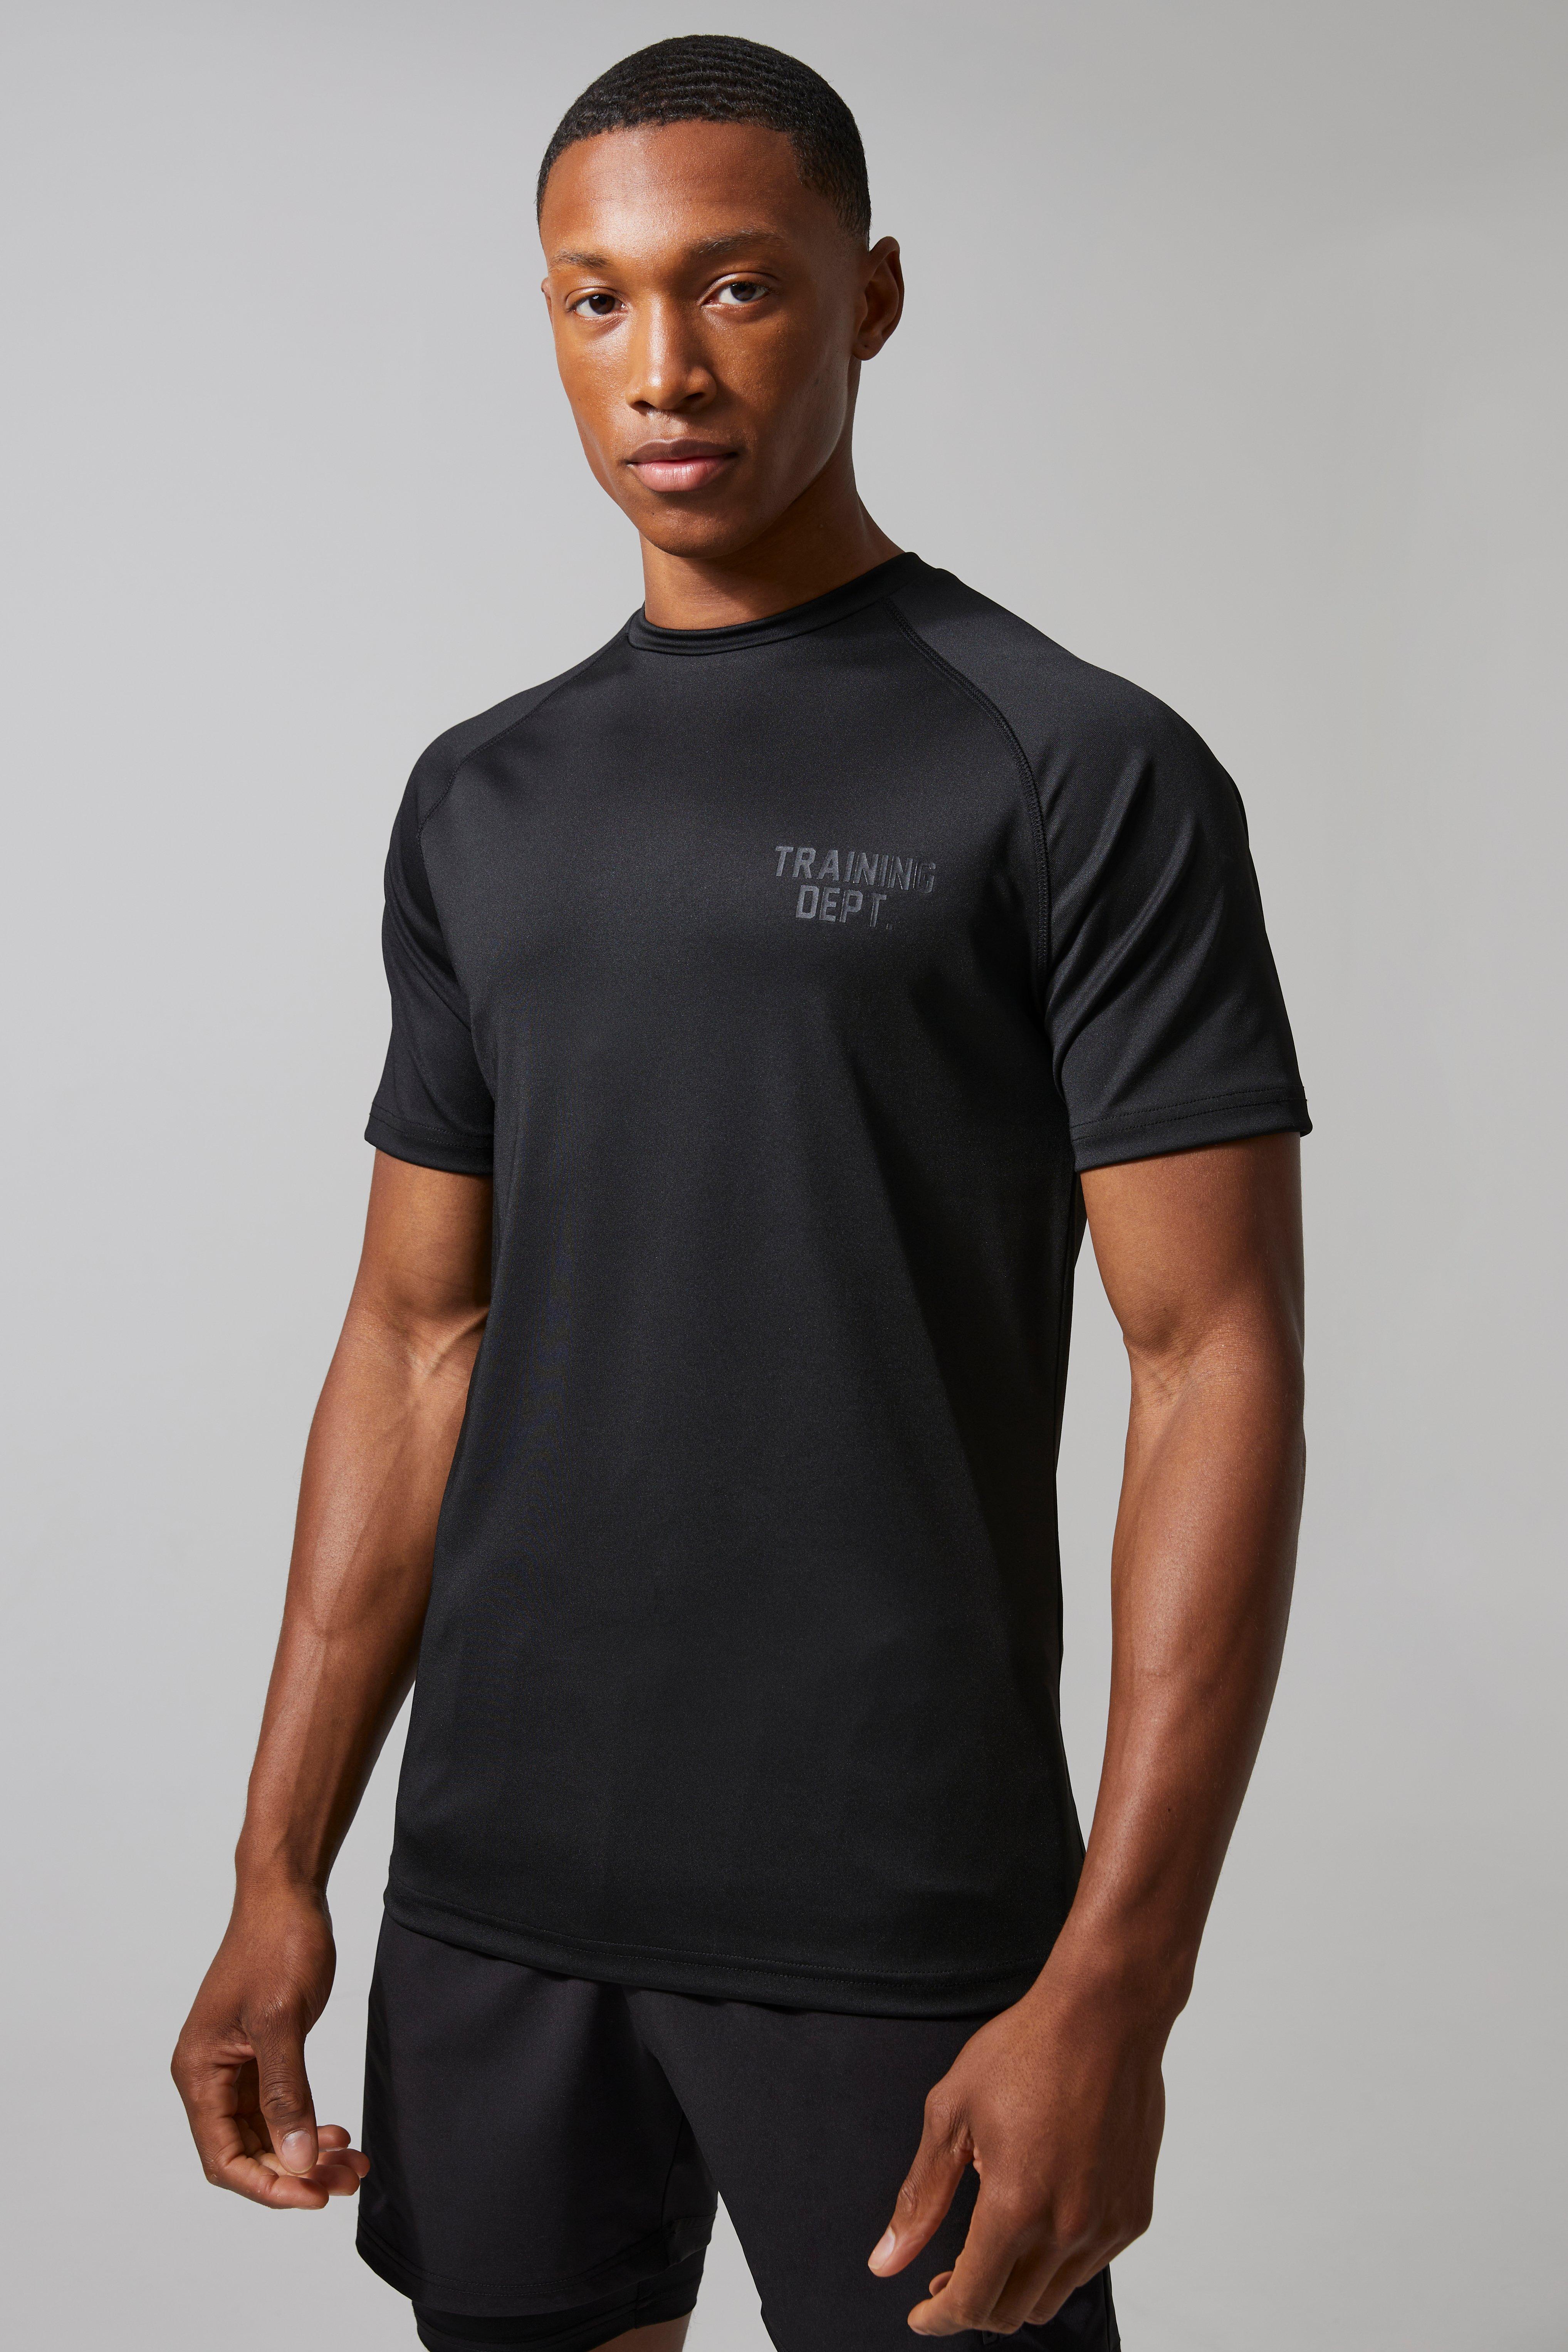 Iron Gods Assault Dri-fit Black Camo Workout T-shirt, Gym Clothing, Men's  Gym Shirt, Aesthetic Clothes, Gym Apparel, Gifts for Men 